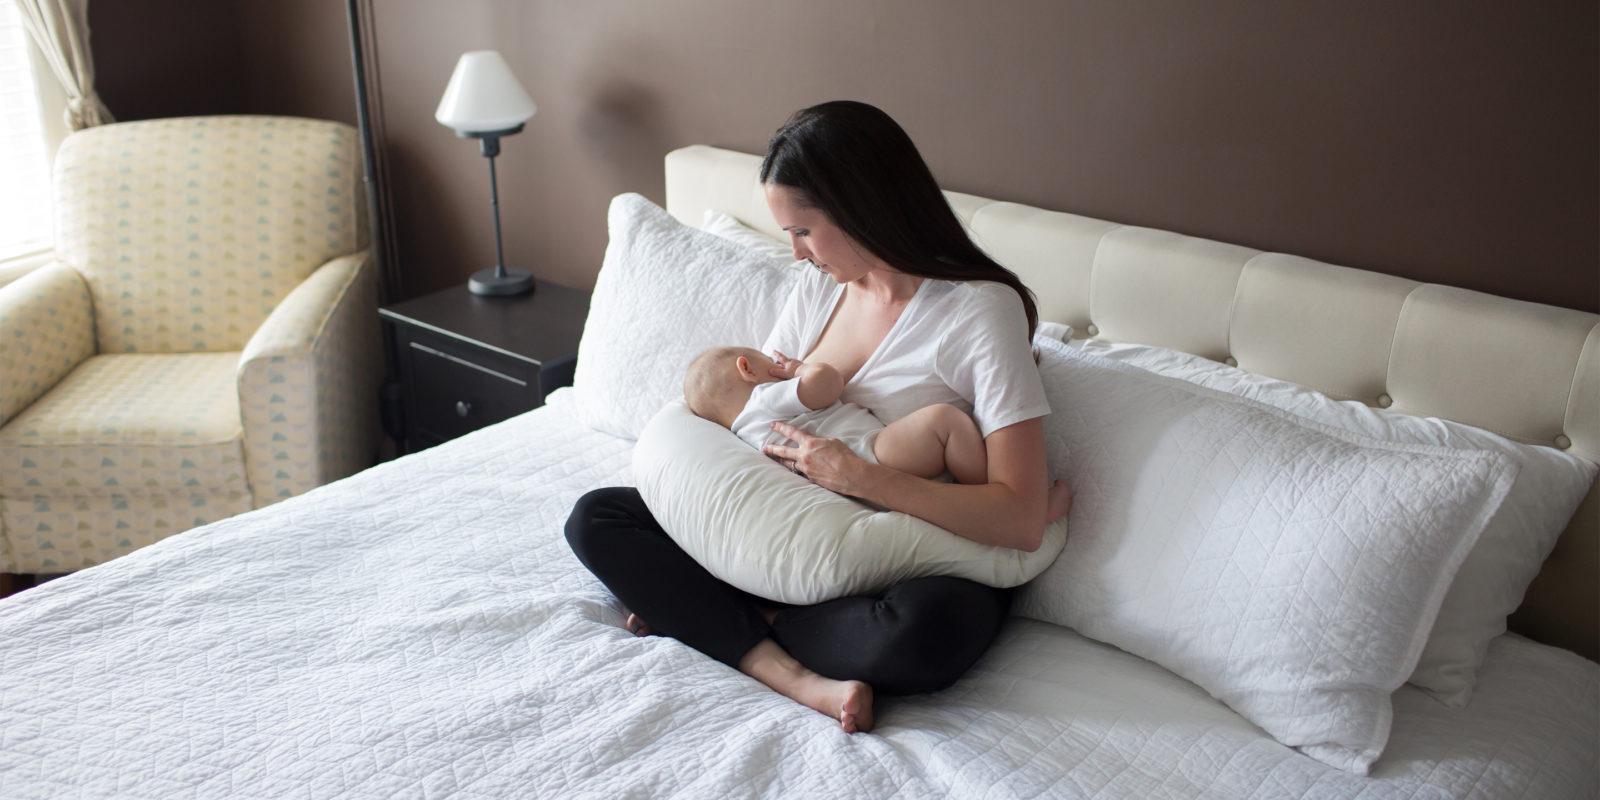 Woman sitting on bed breastfeeding baby